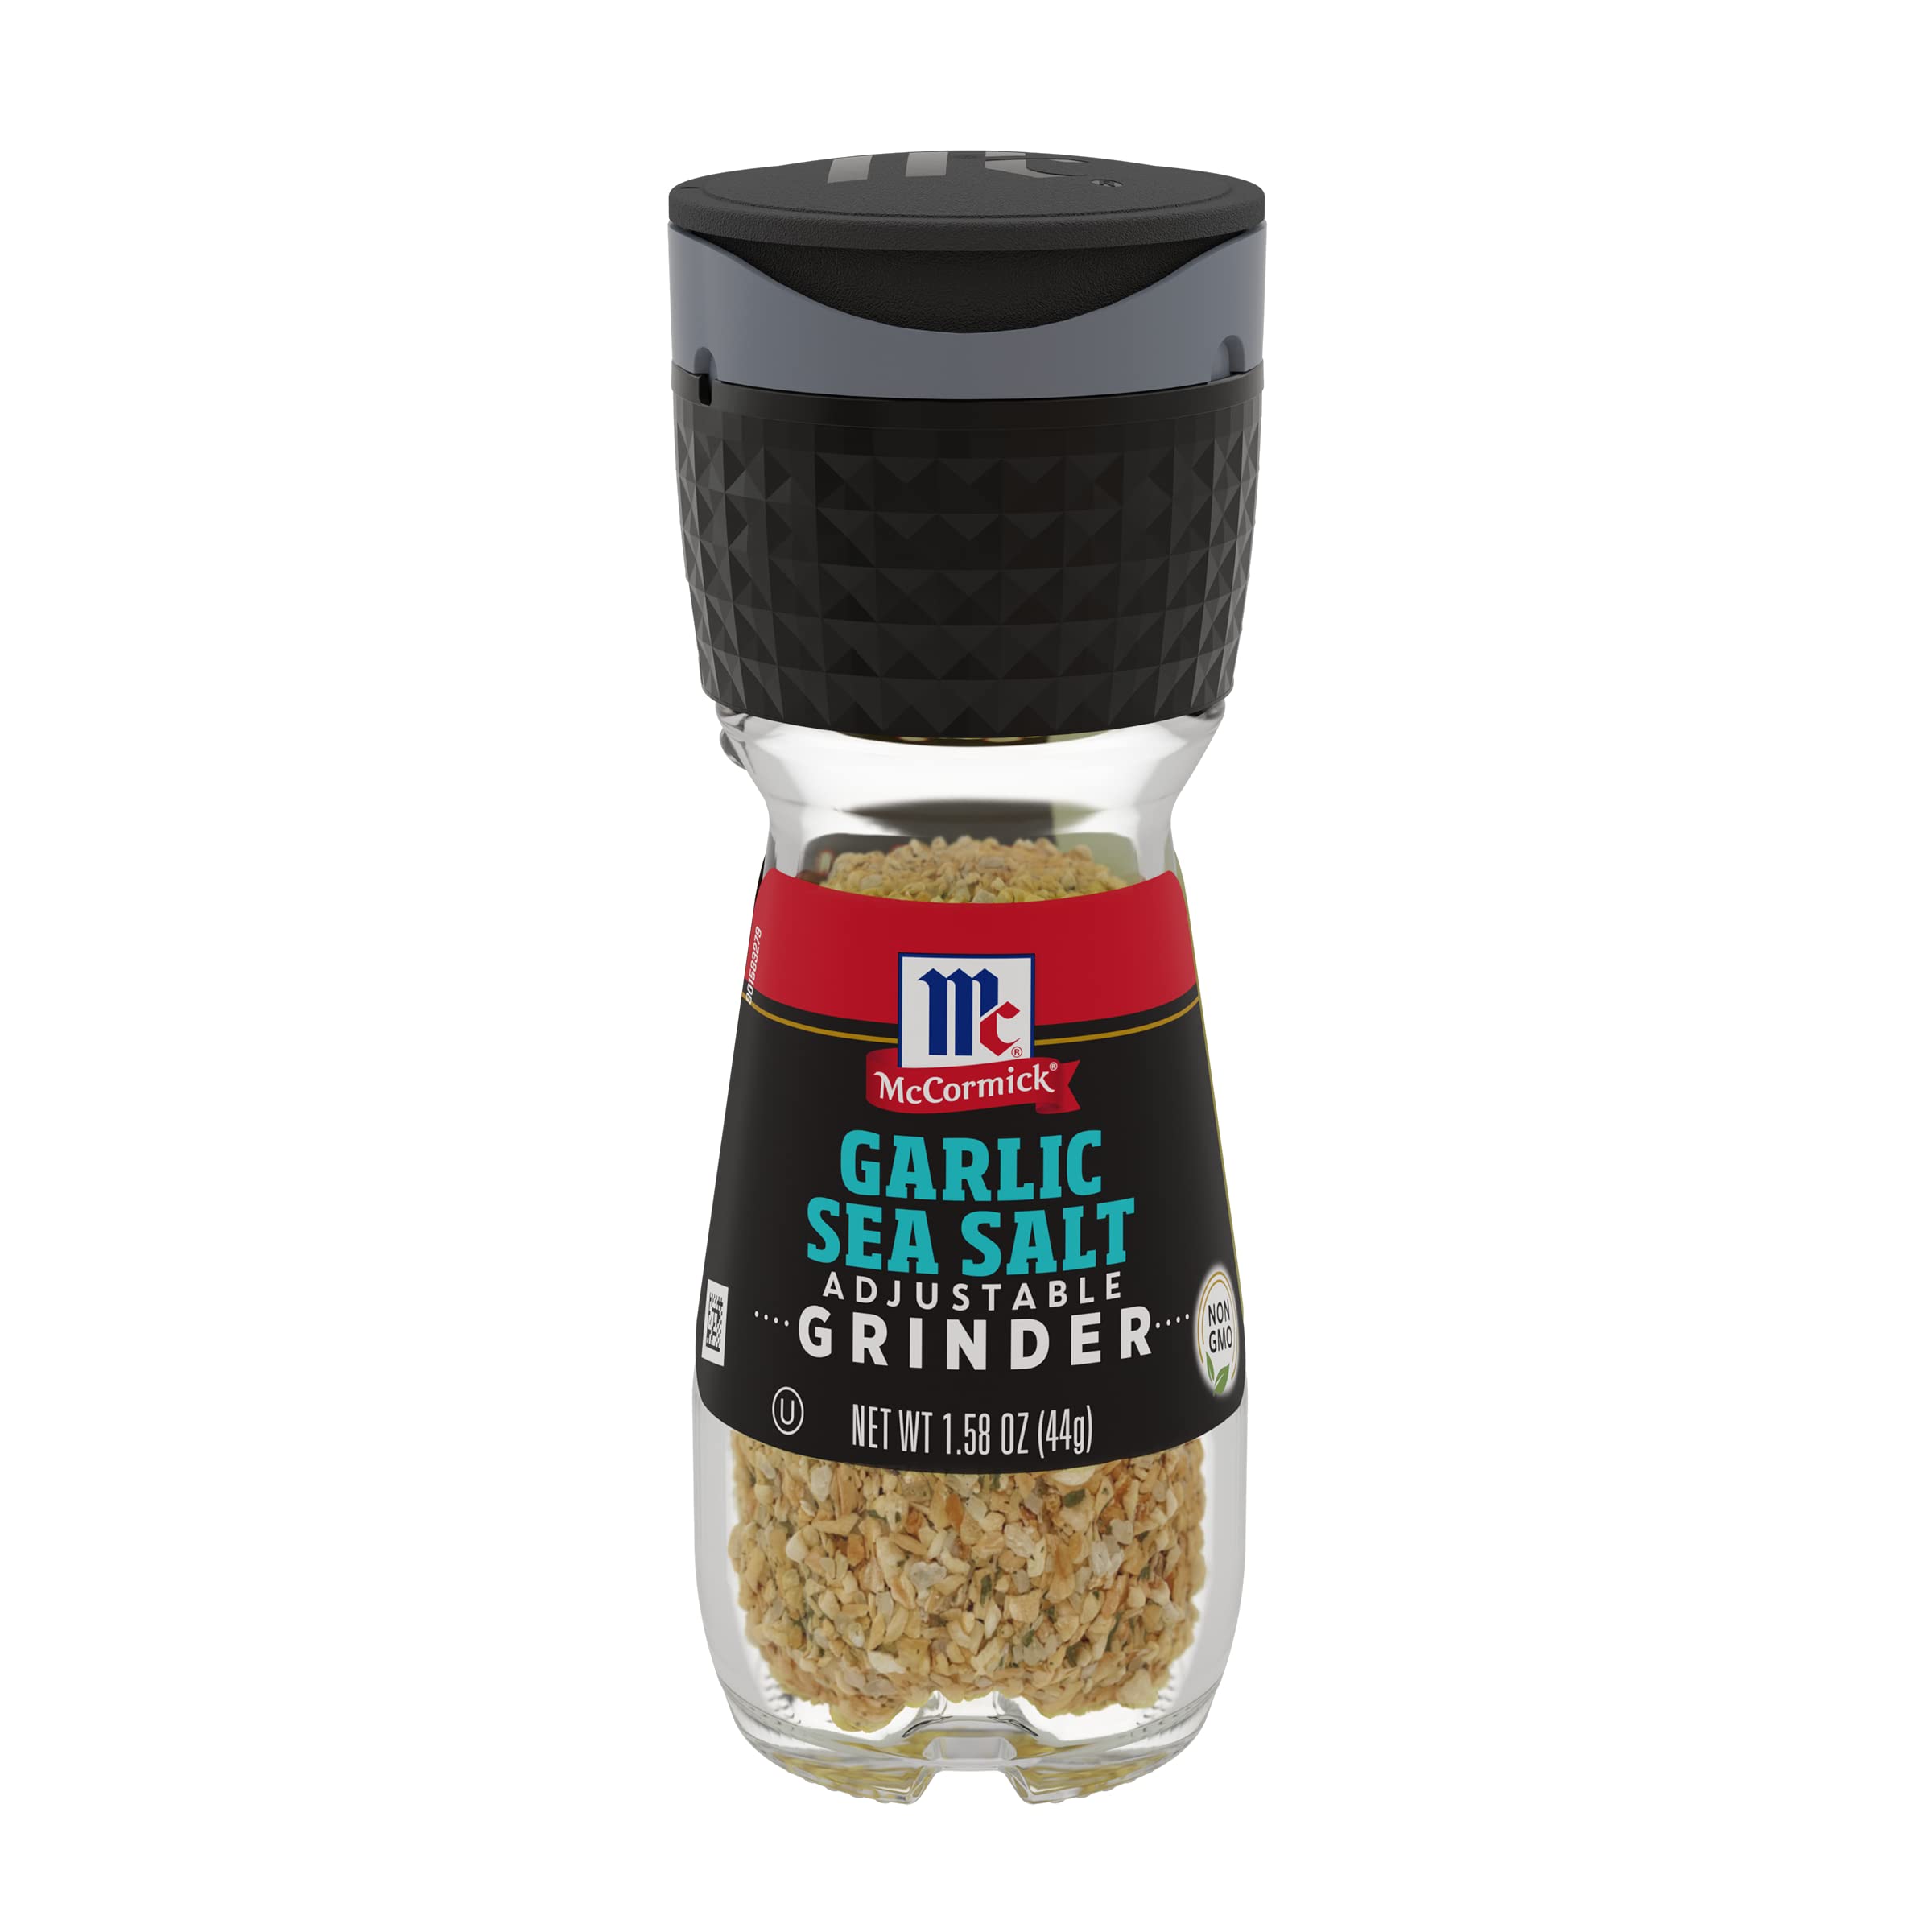 6-Pack 1.58-Oz McCormick Garlic Sea Salt Grinder $7.30 w/ S&S + Free Shipping w/ Prime or $35+